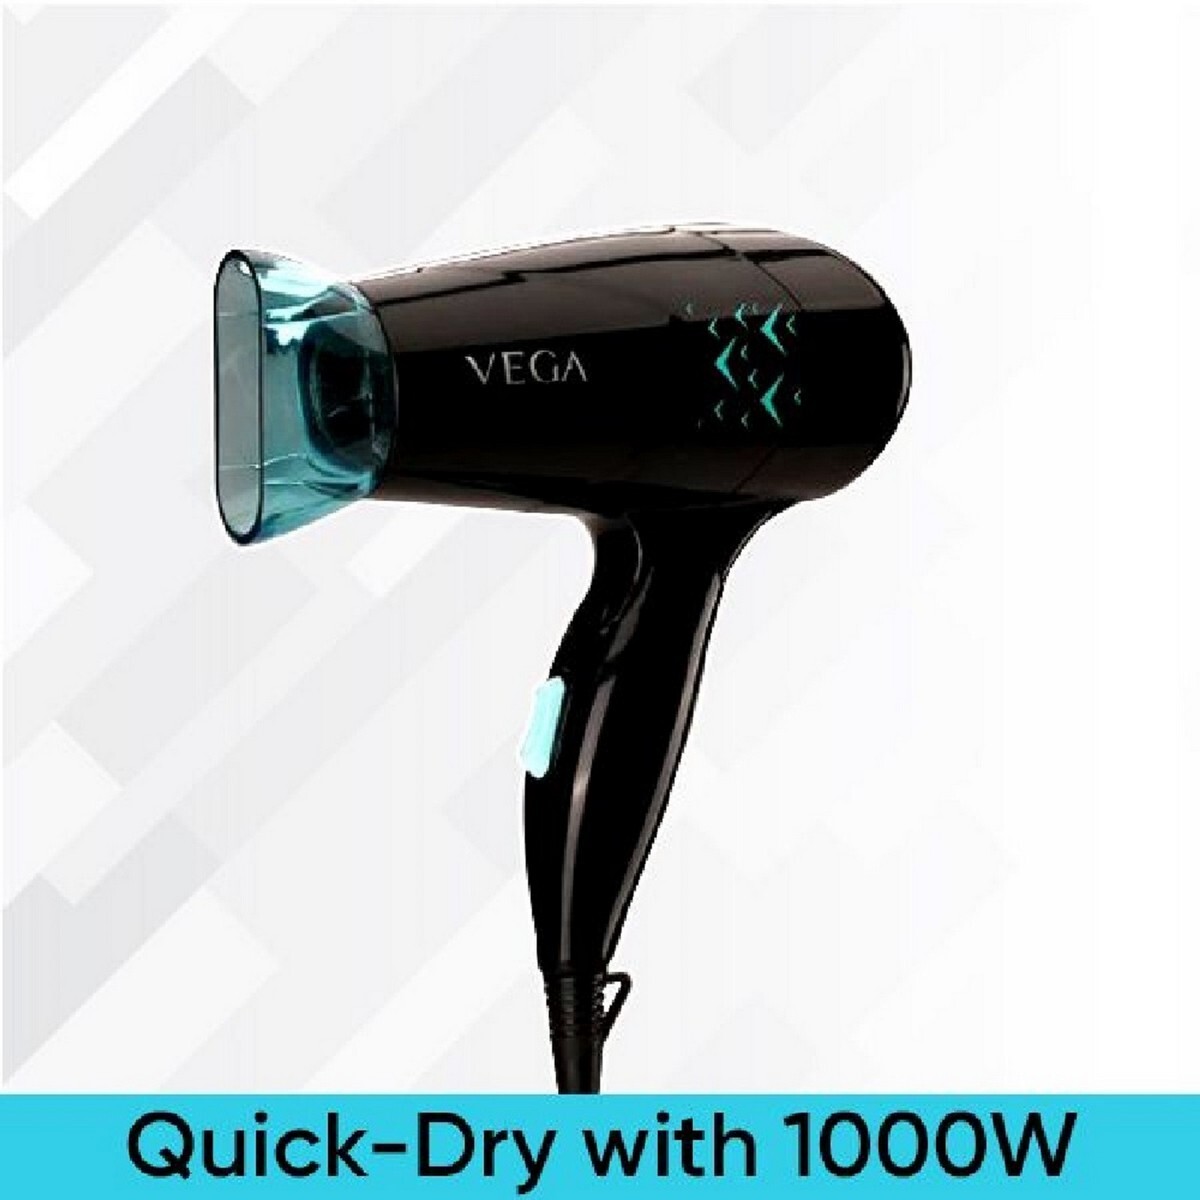 Vega Glow Glam 1000W Hair Dryer VHDH- 26